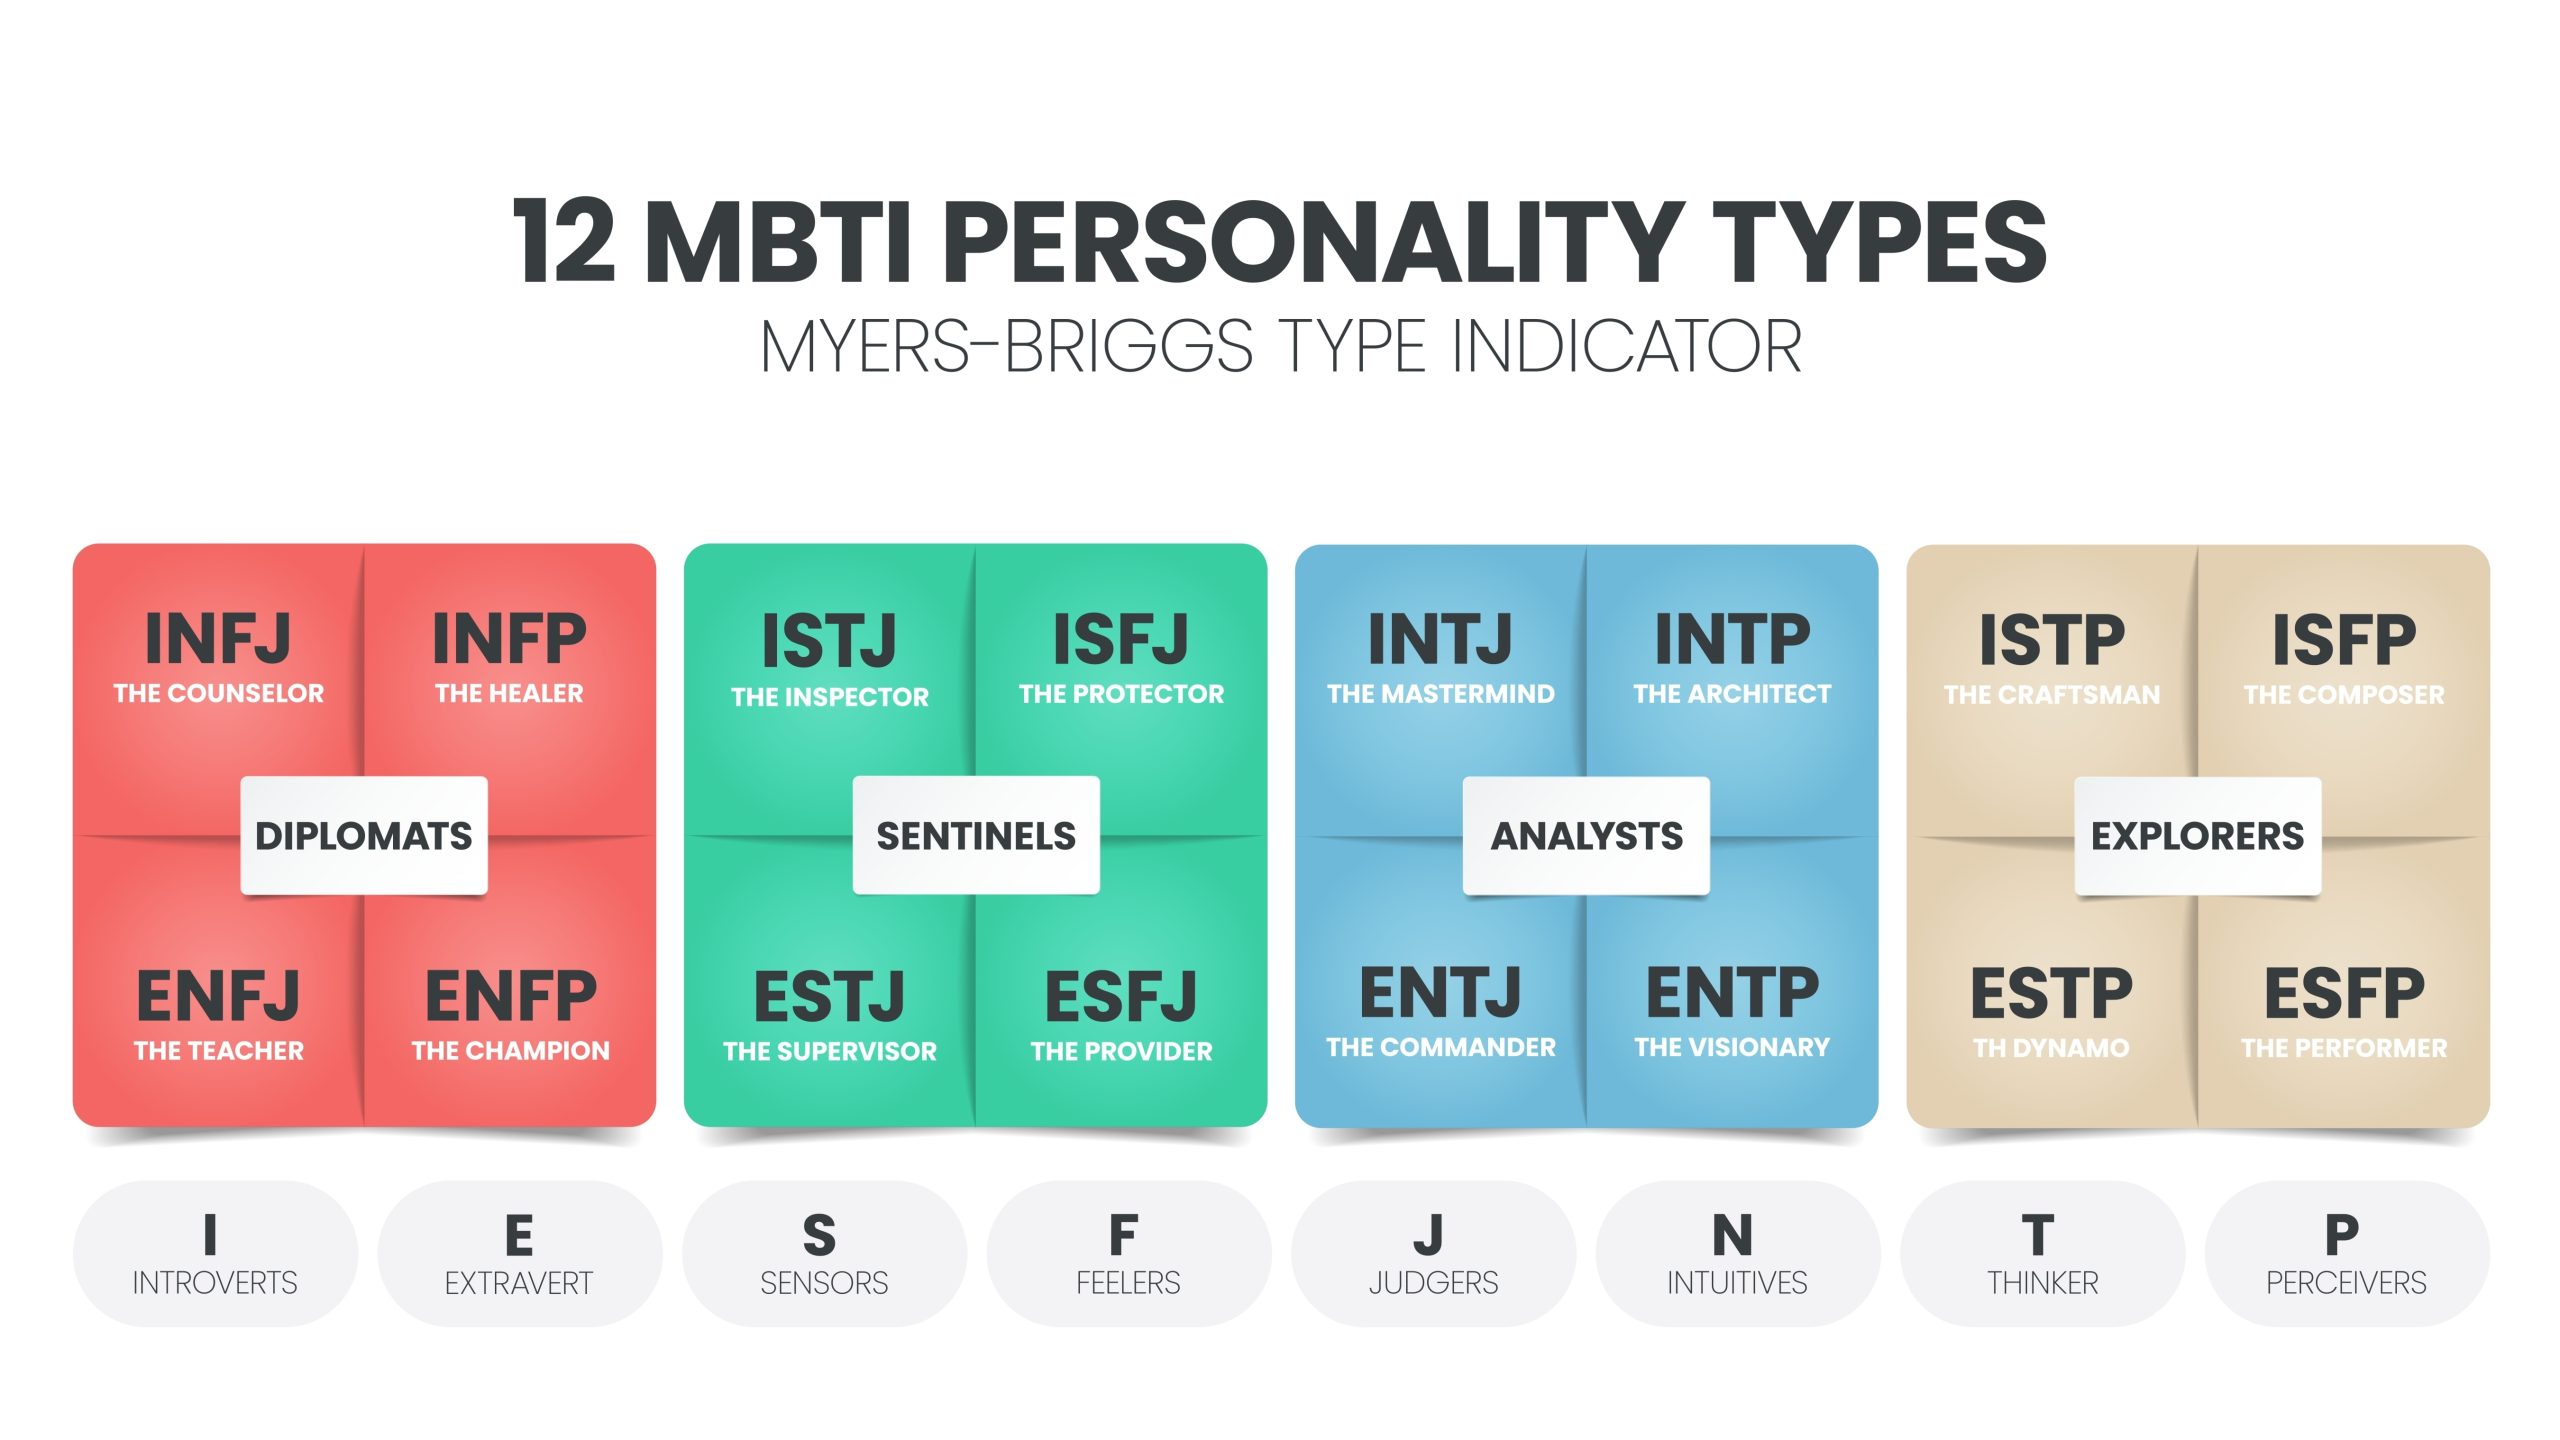 Badger MBTI Personality Type: ESTP or ESTJ?